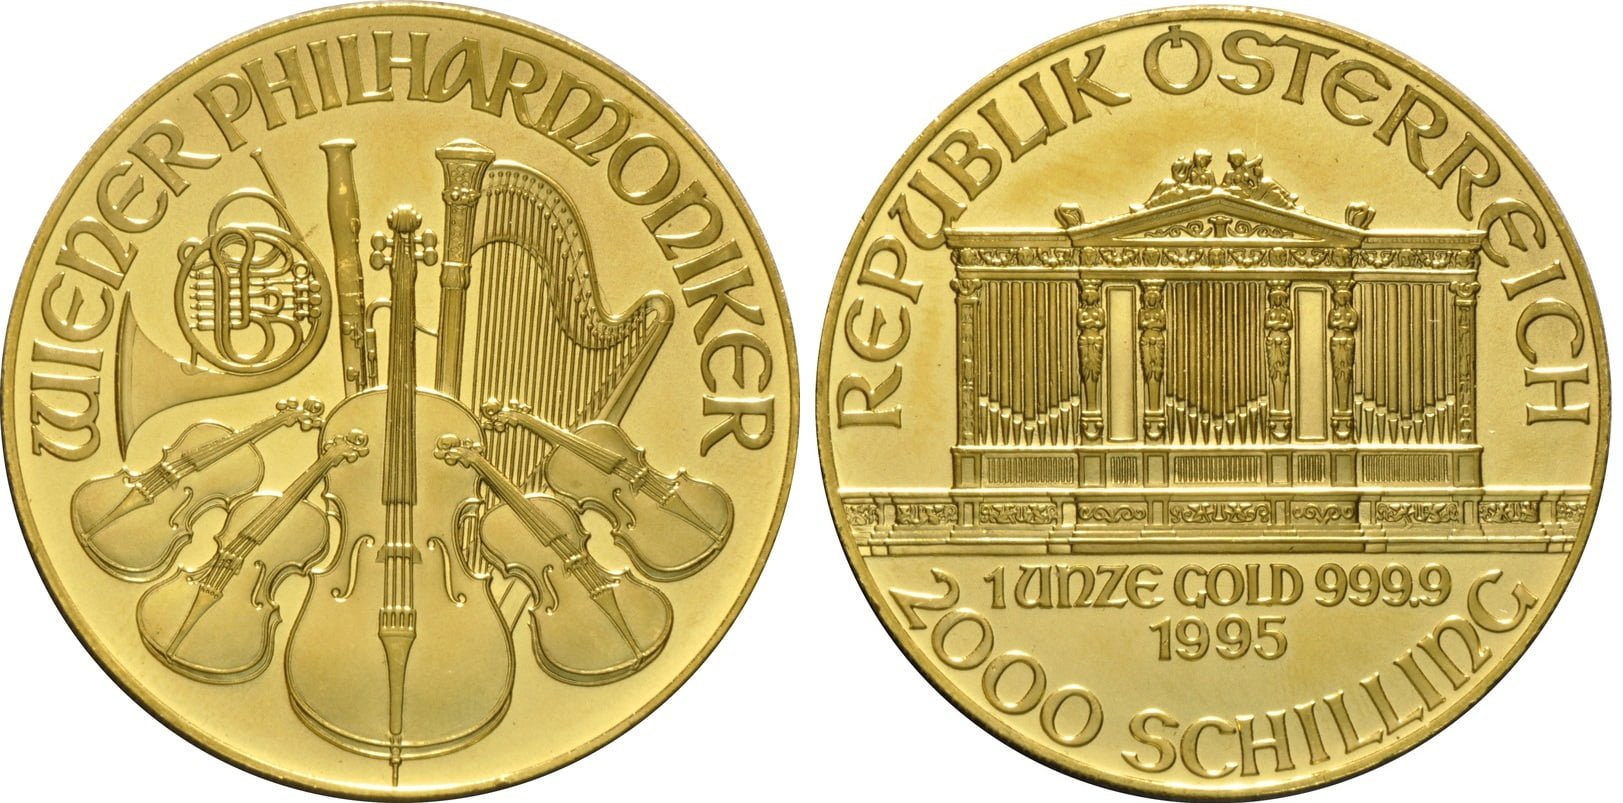 2000 Gold Schilling Vienna Philharmonic Gold Bullion Coinage